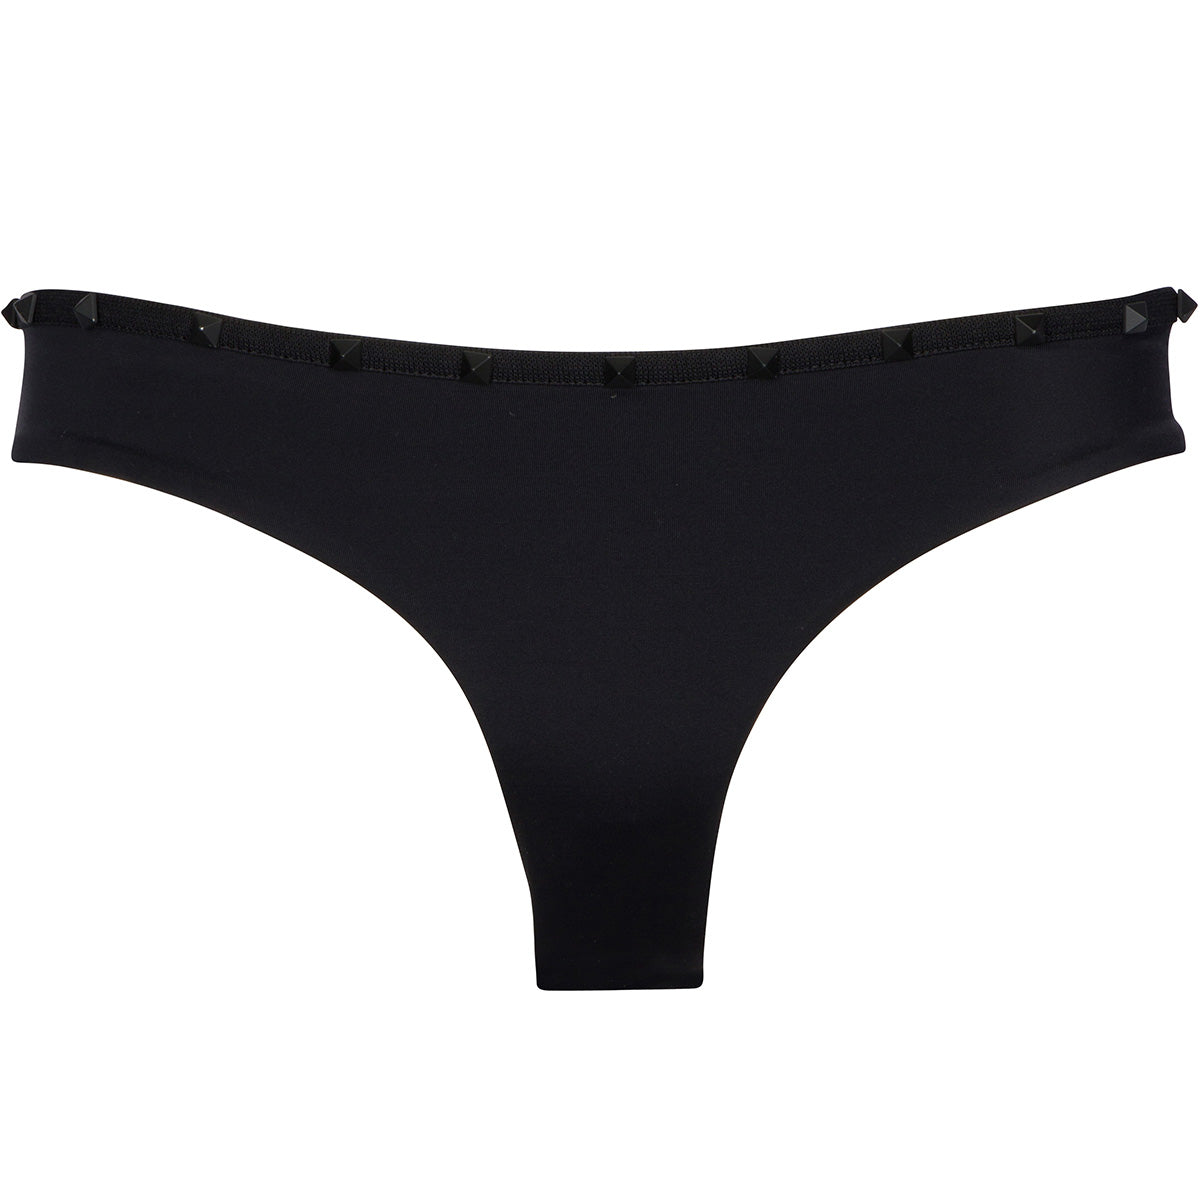 Billy Studs: The Studded Classic Bikini Bottom